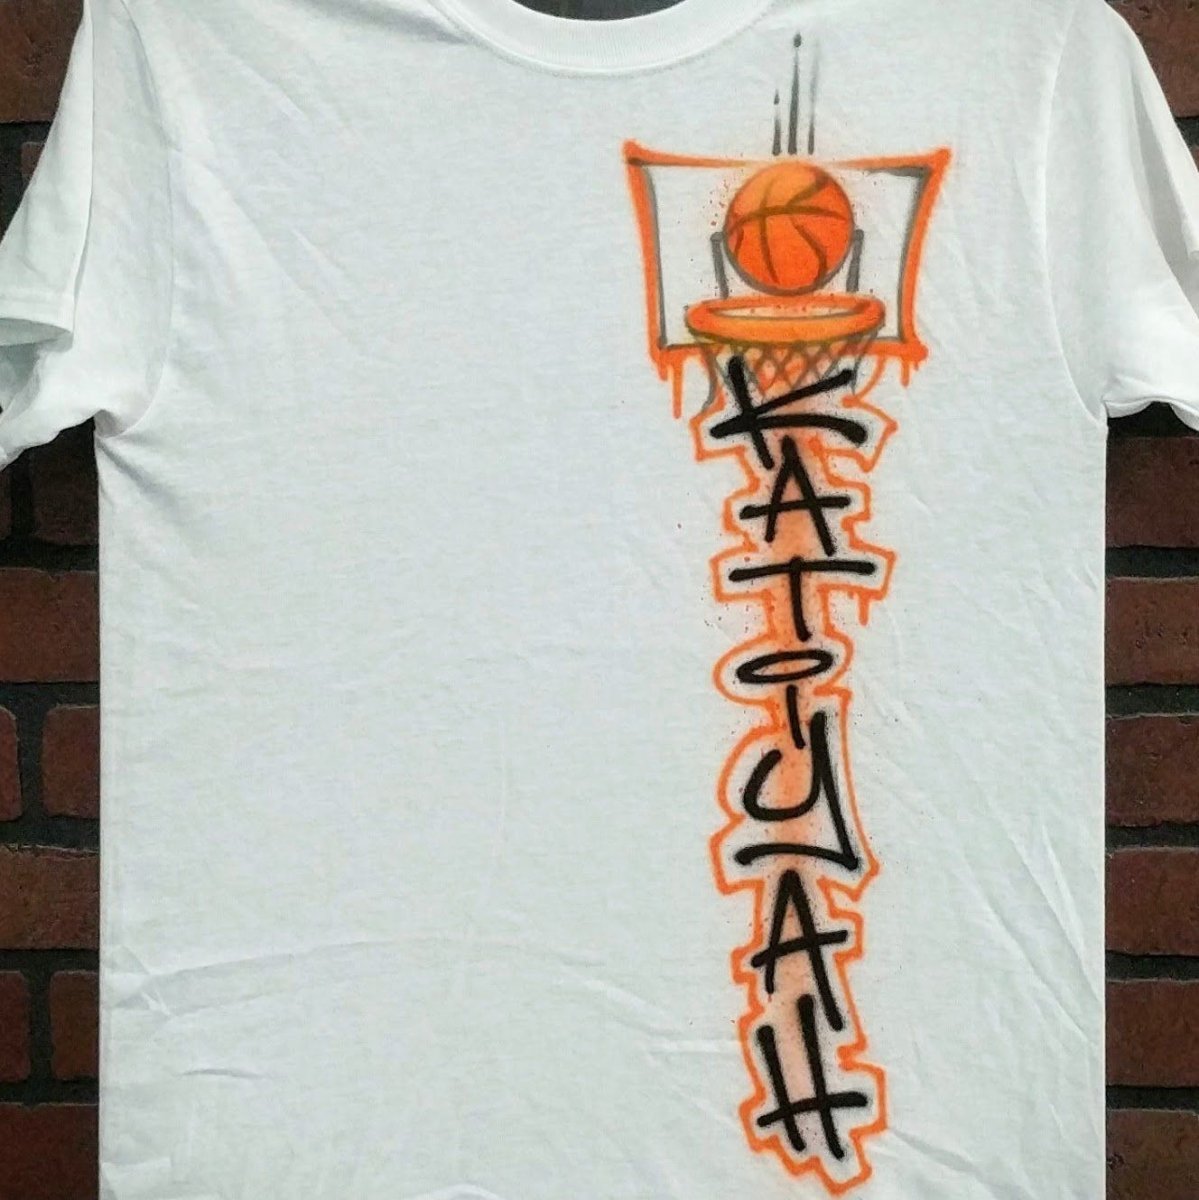 Vertical Basketball Design Customizable Airbrush T shirt Design from Airbrush Customs x Dale The Airbrush Guy